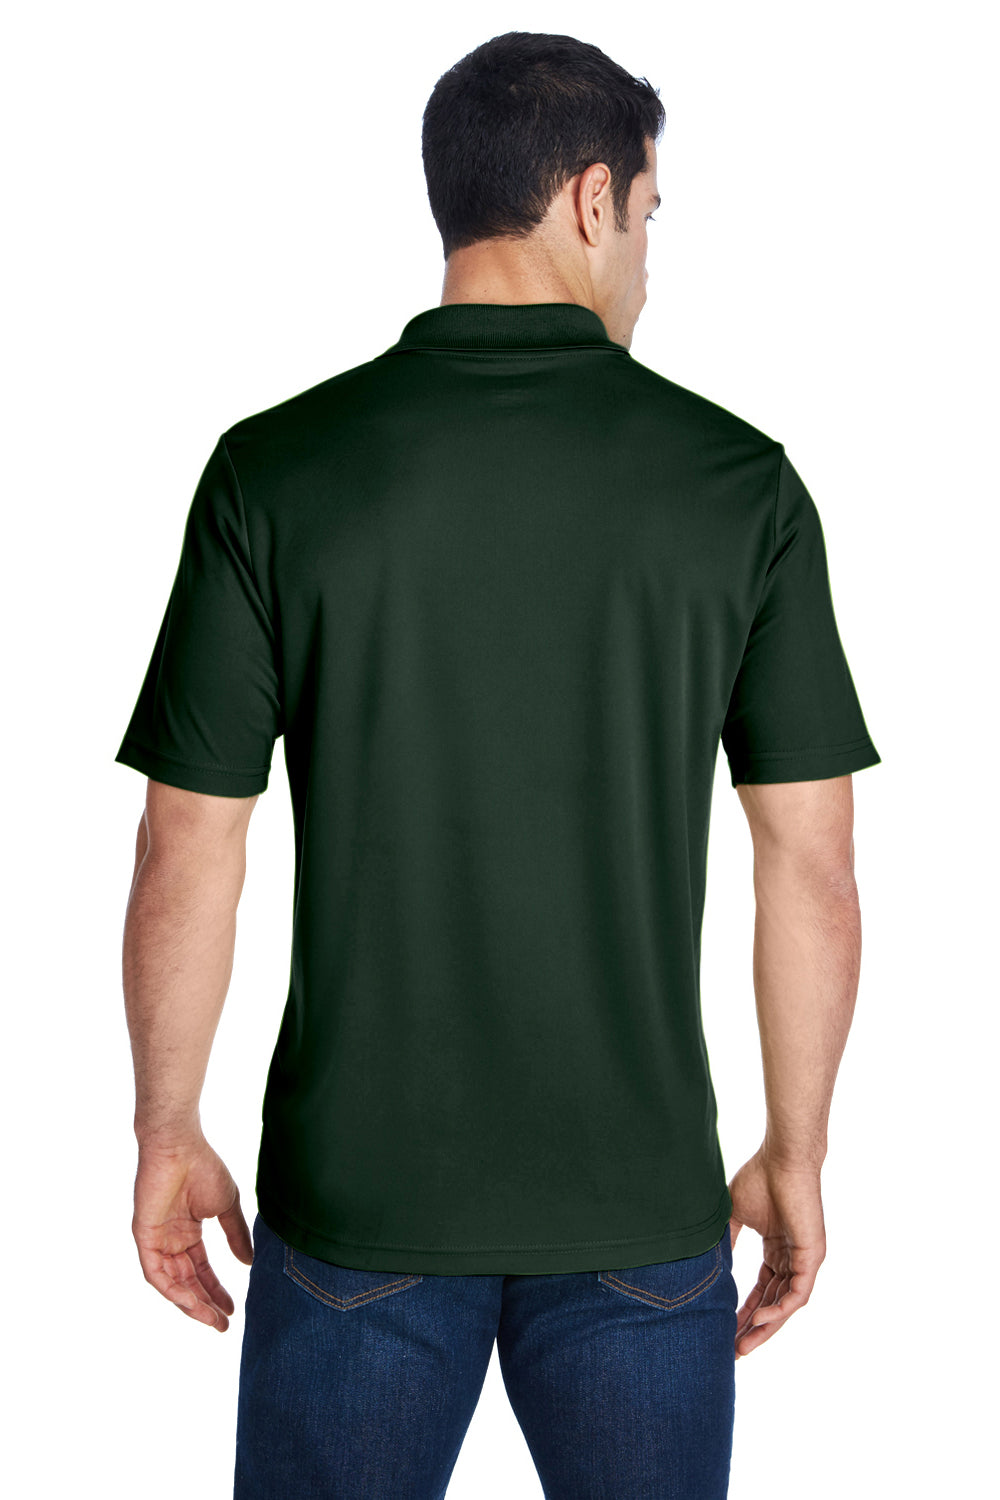 Core 365 88181 Mens Origin Performance Moisture Wicking Short Sleeve Polo Shirt Forest Green Back